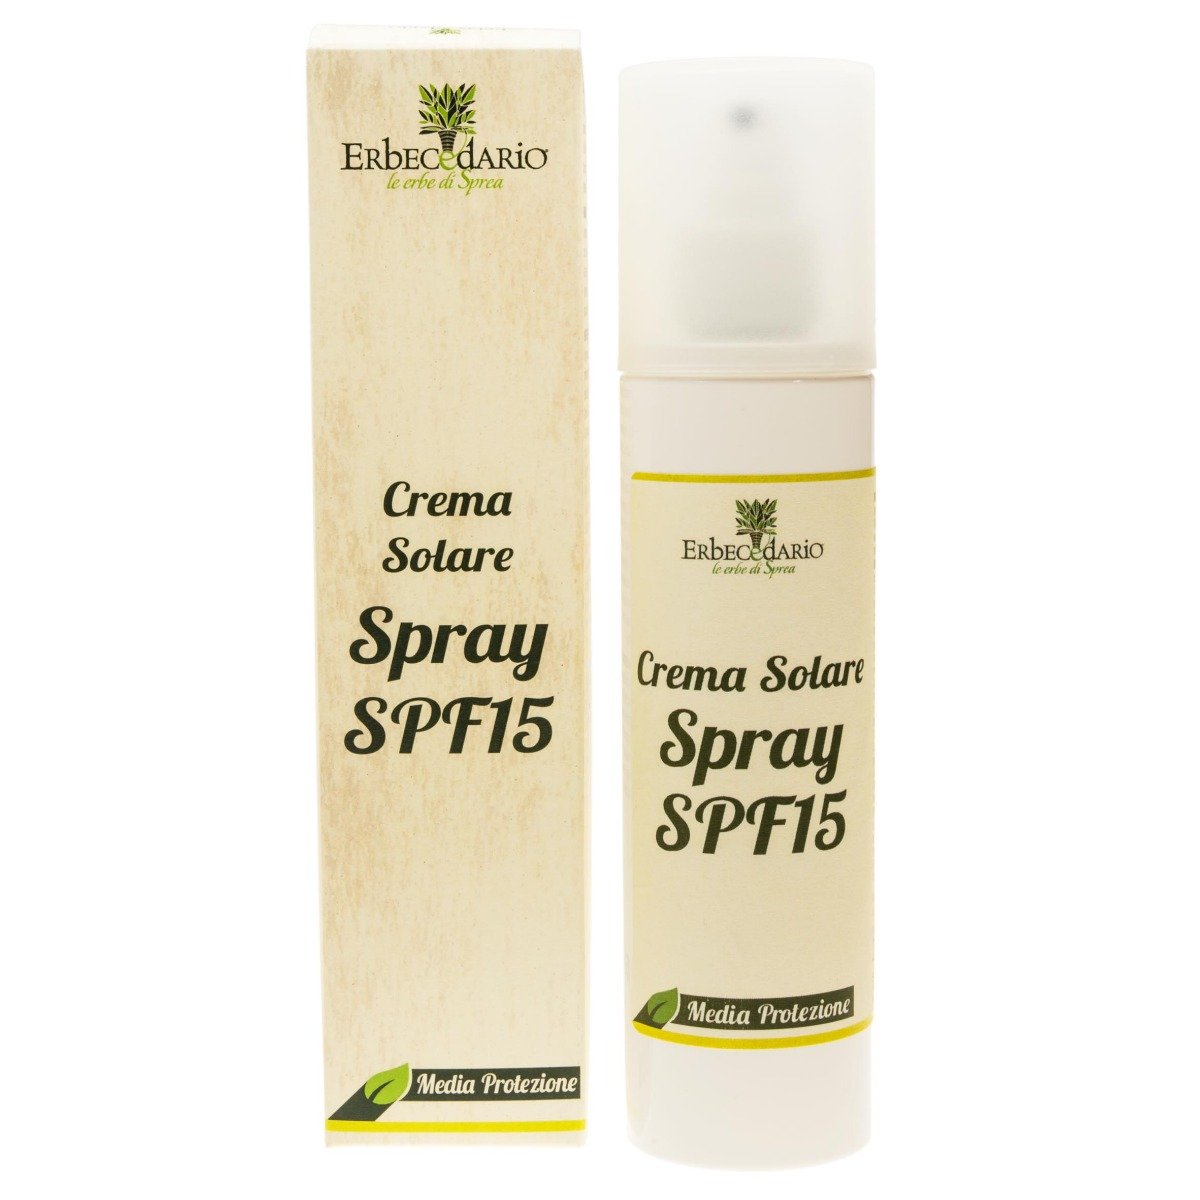 Crema Solare Spray SPF 15